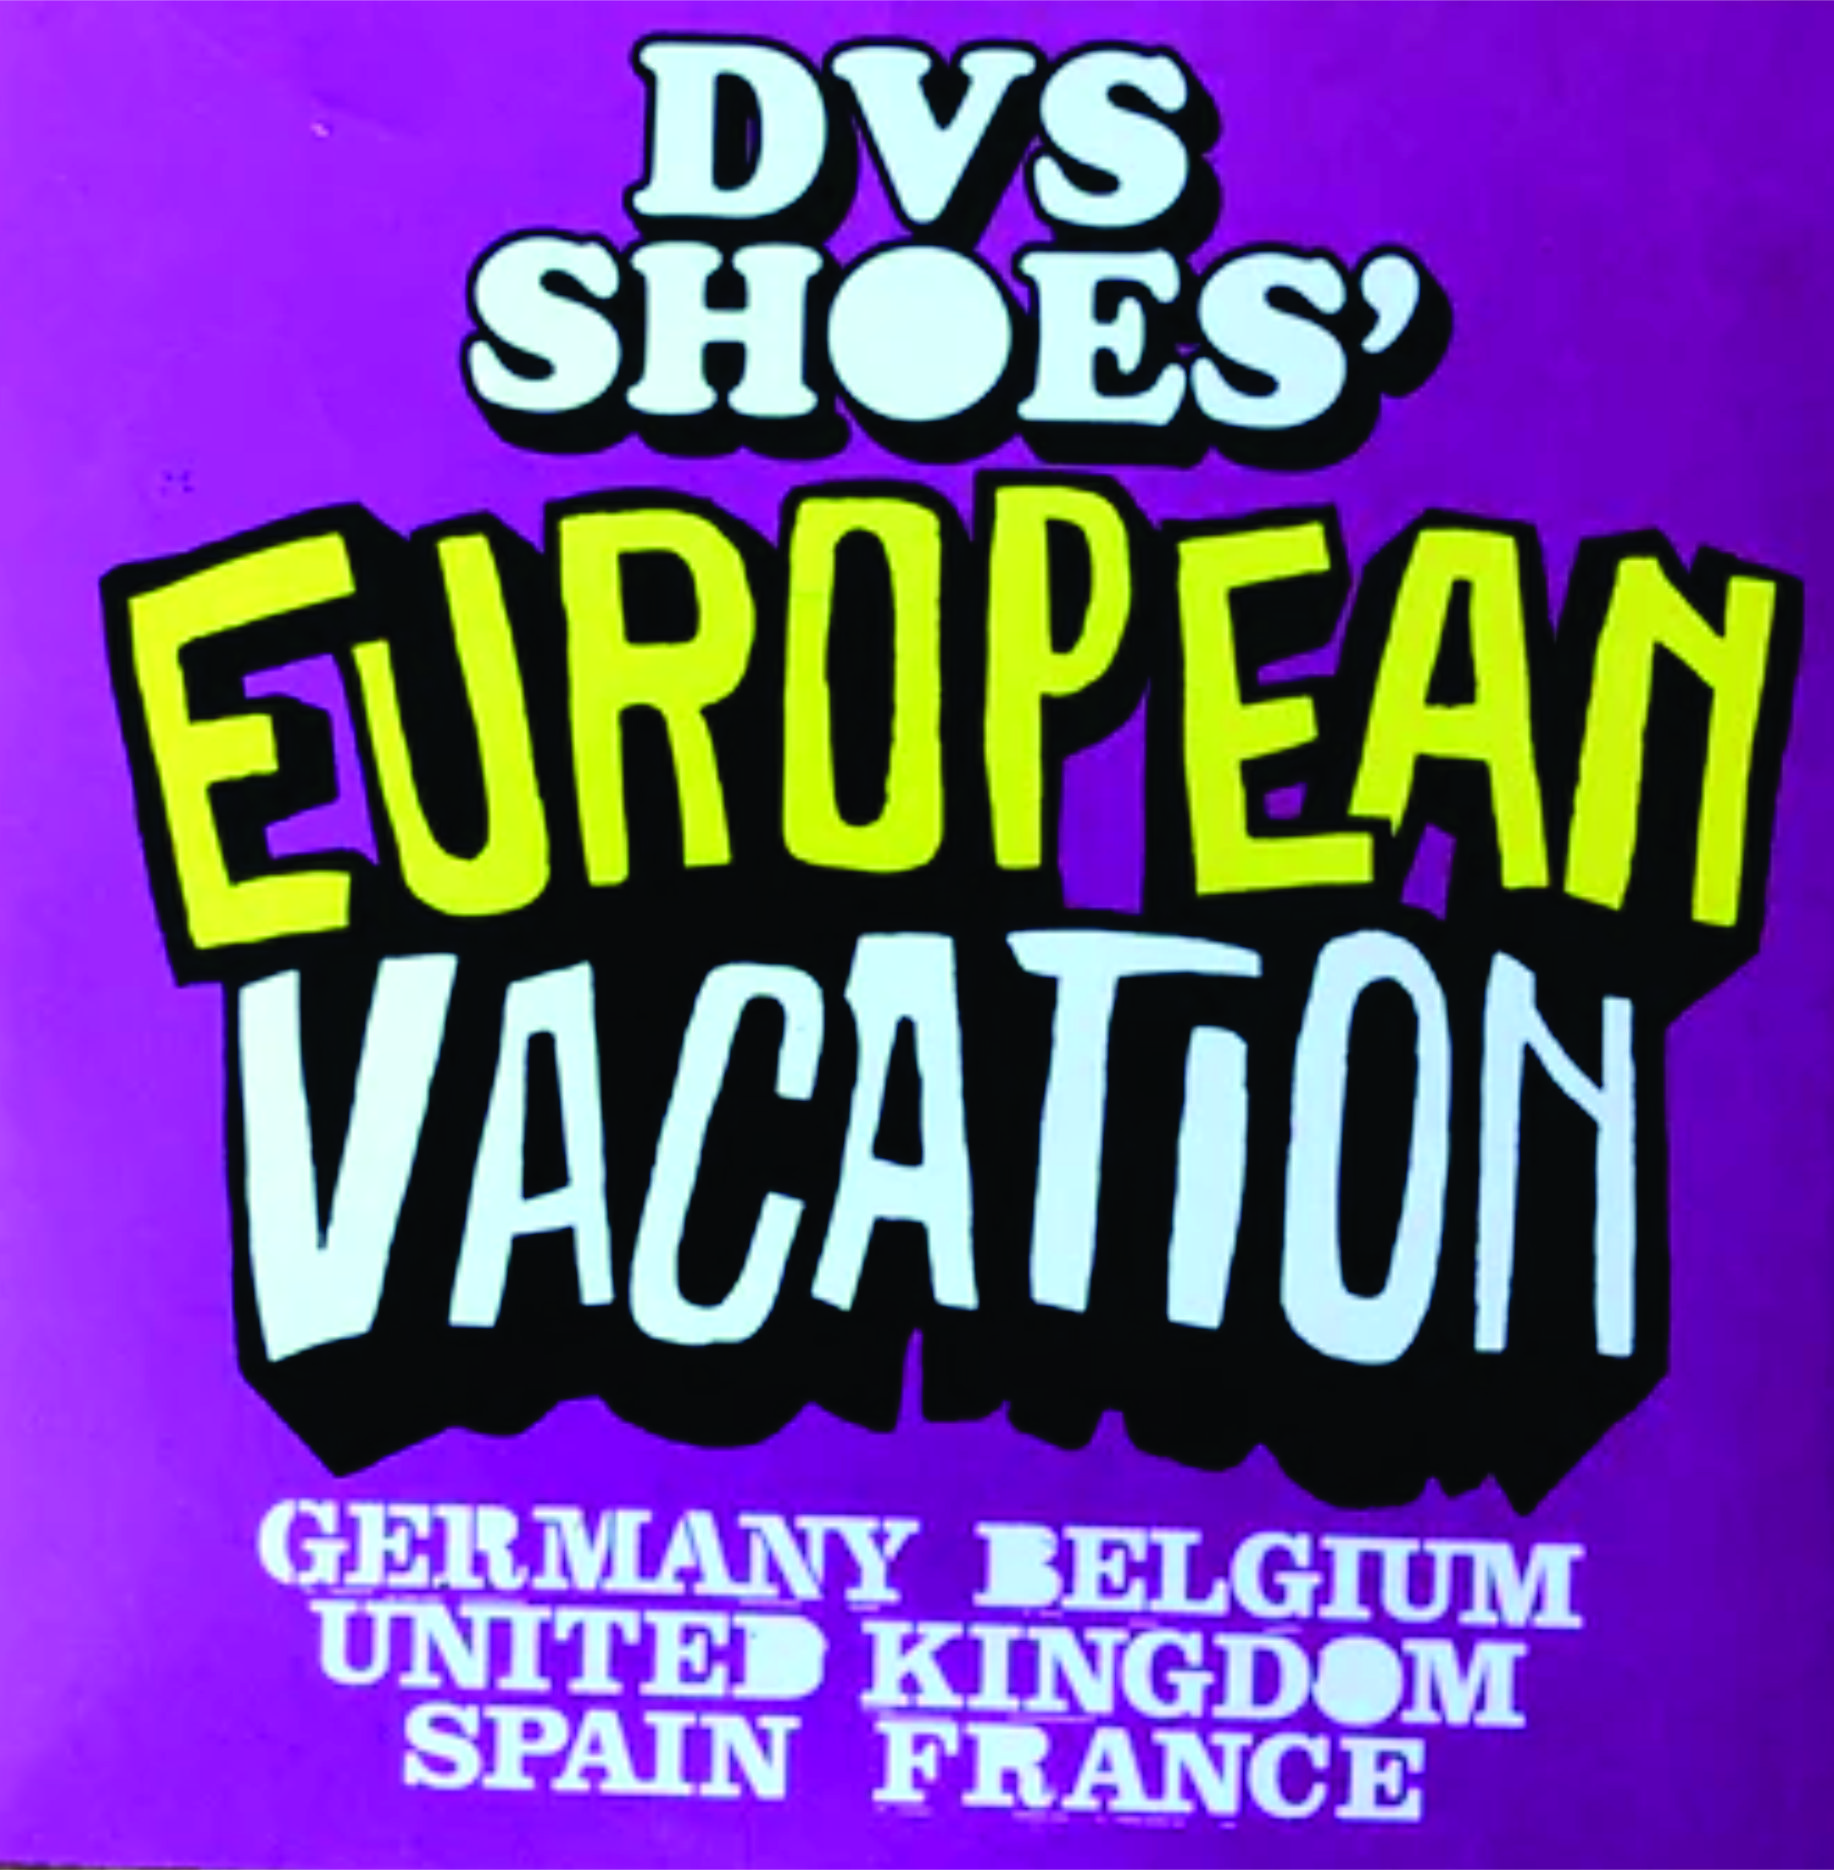 DVS - European Vacation cover